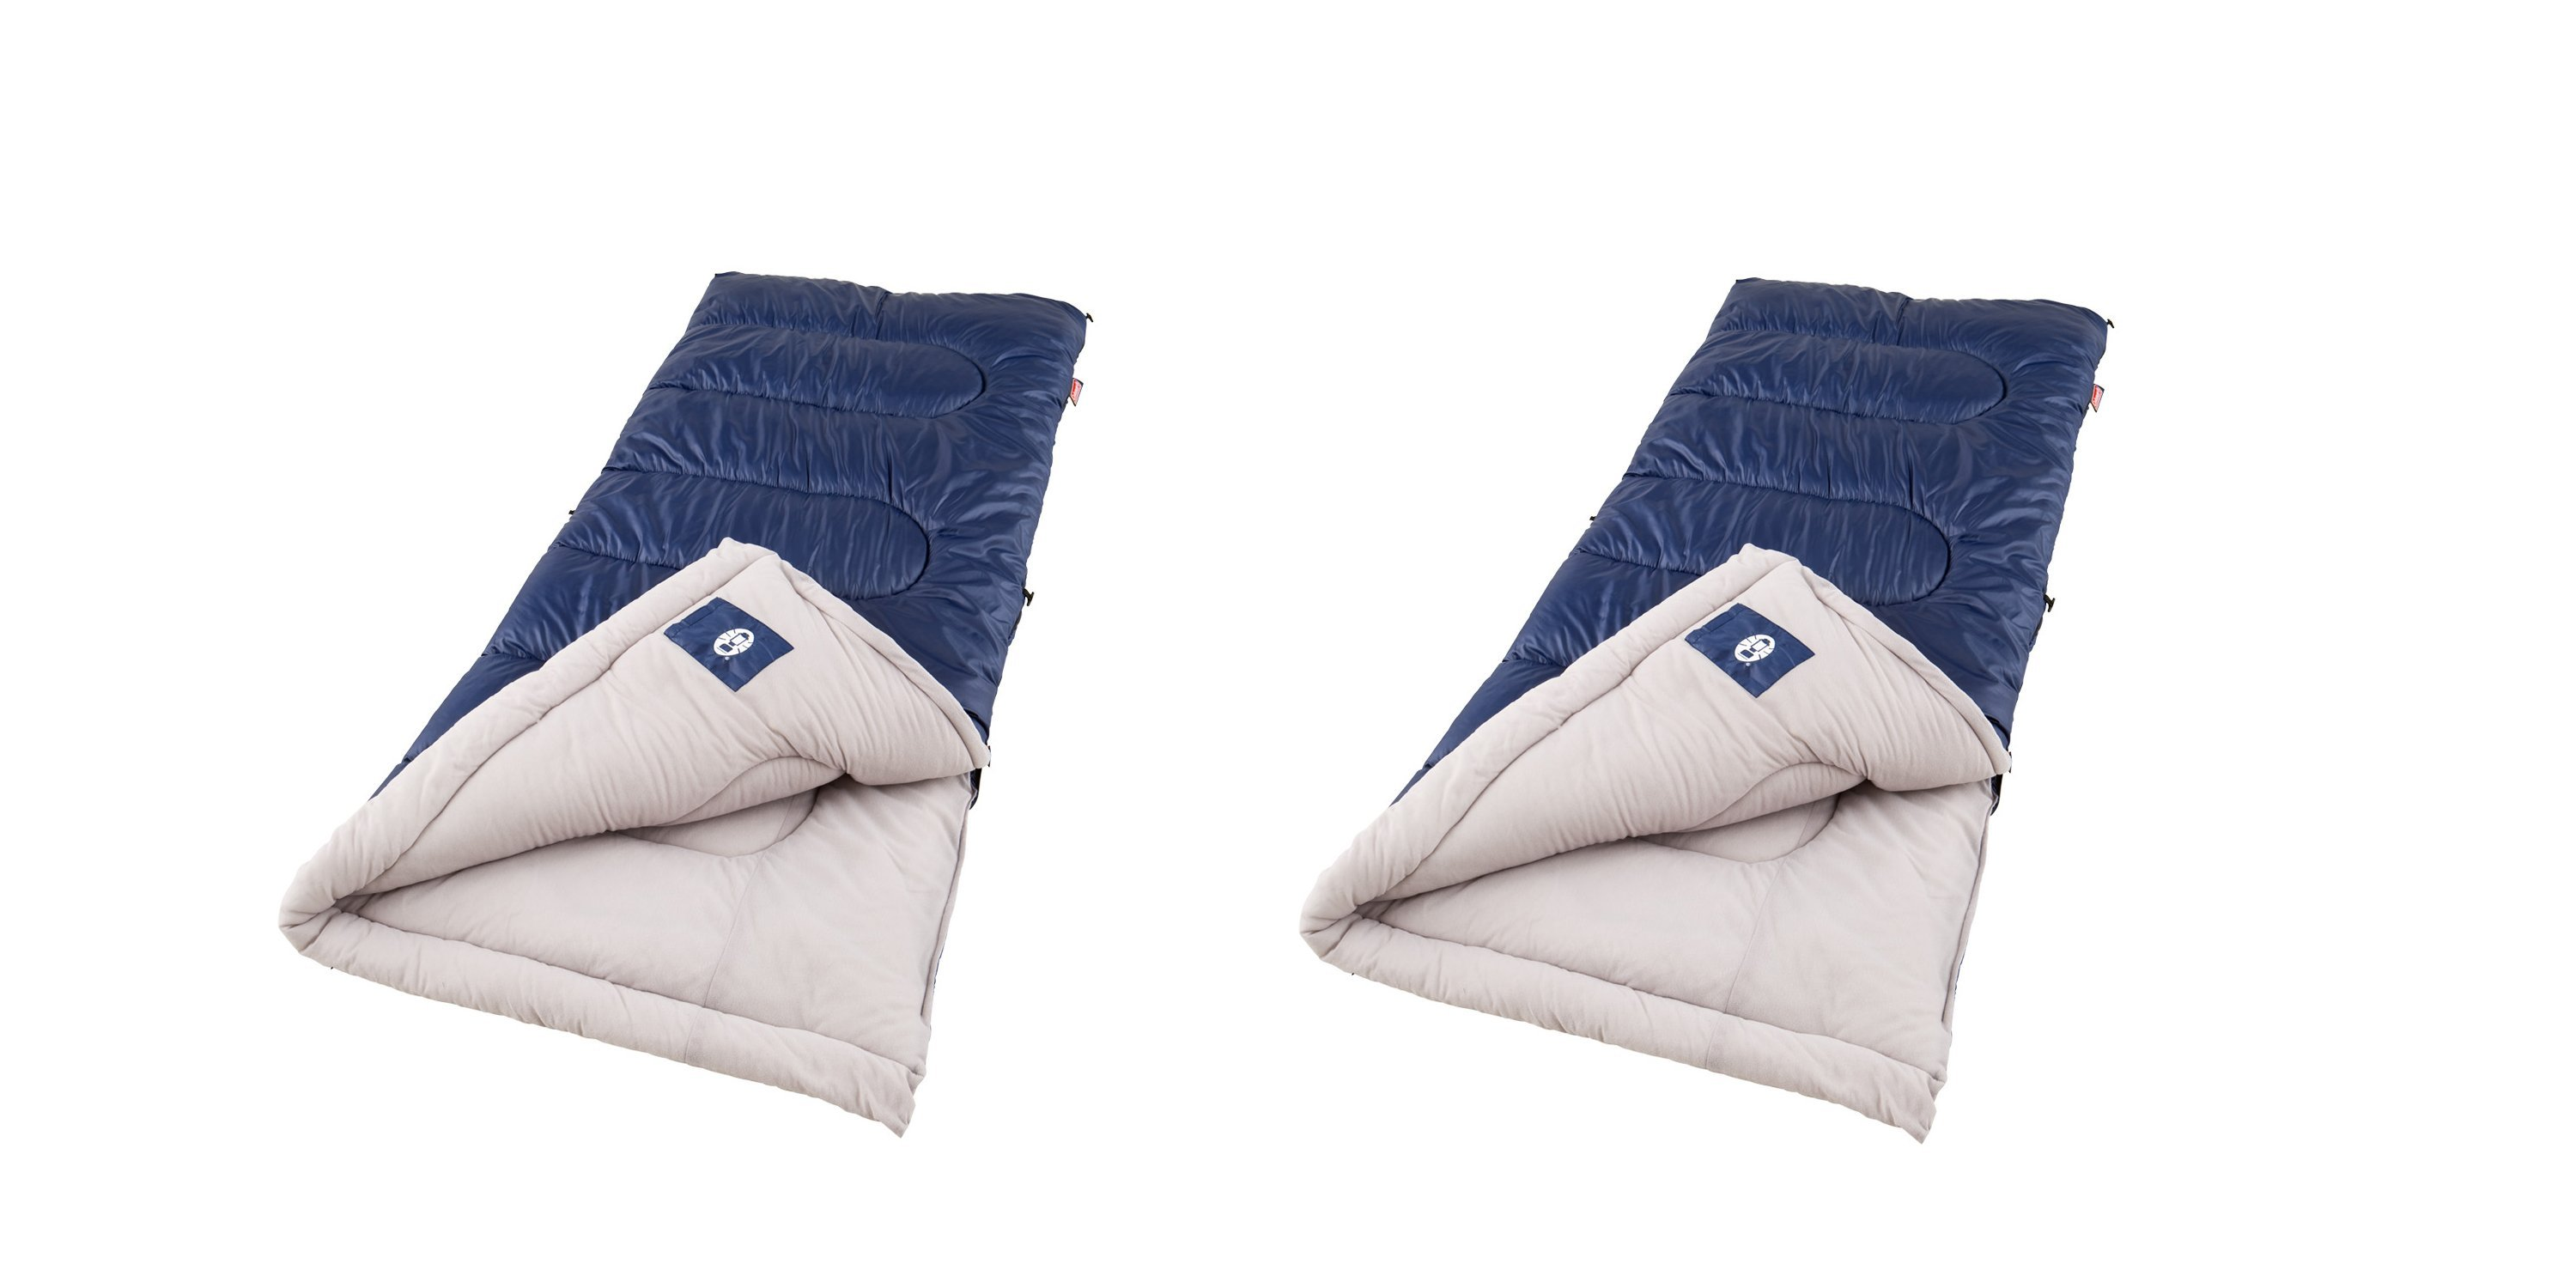 Coleman Brazos Cold-Weather Sleeping Bag—$14.39!